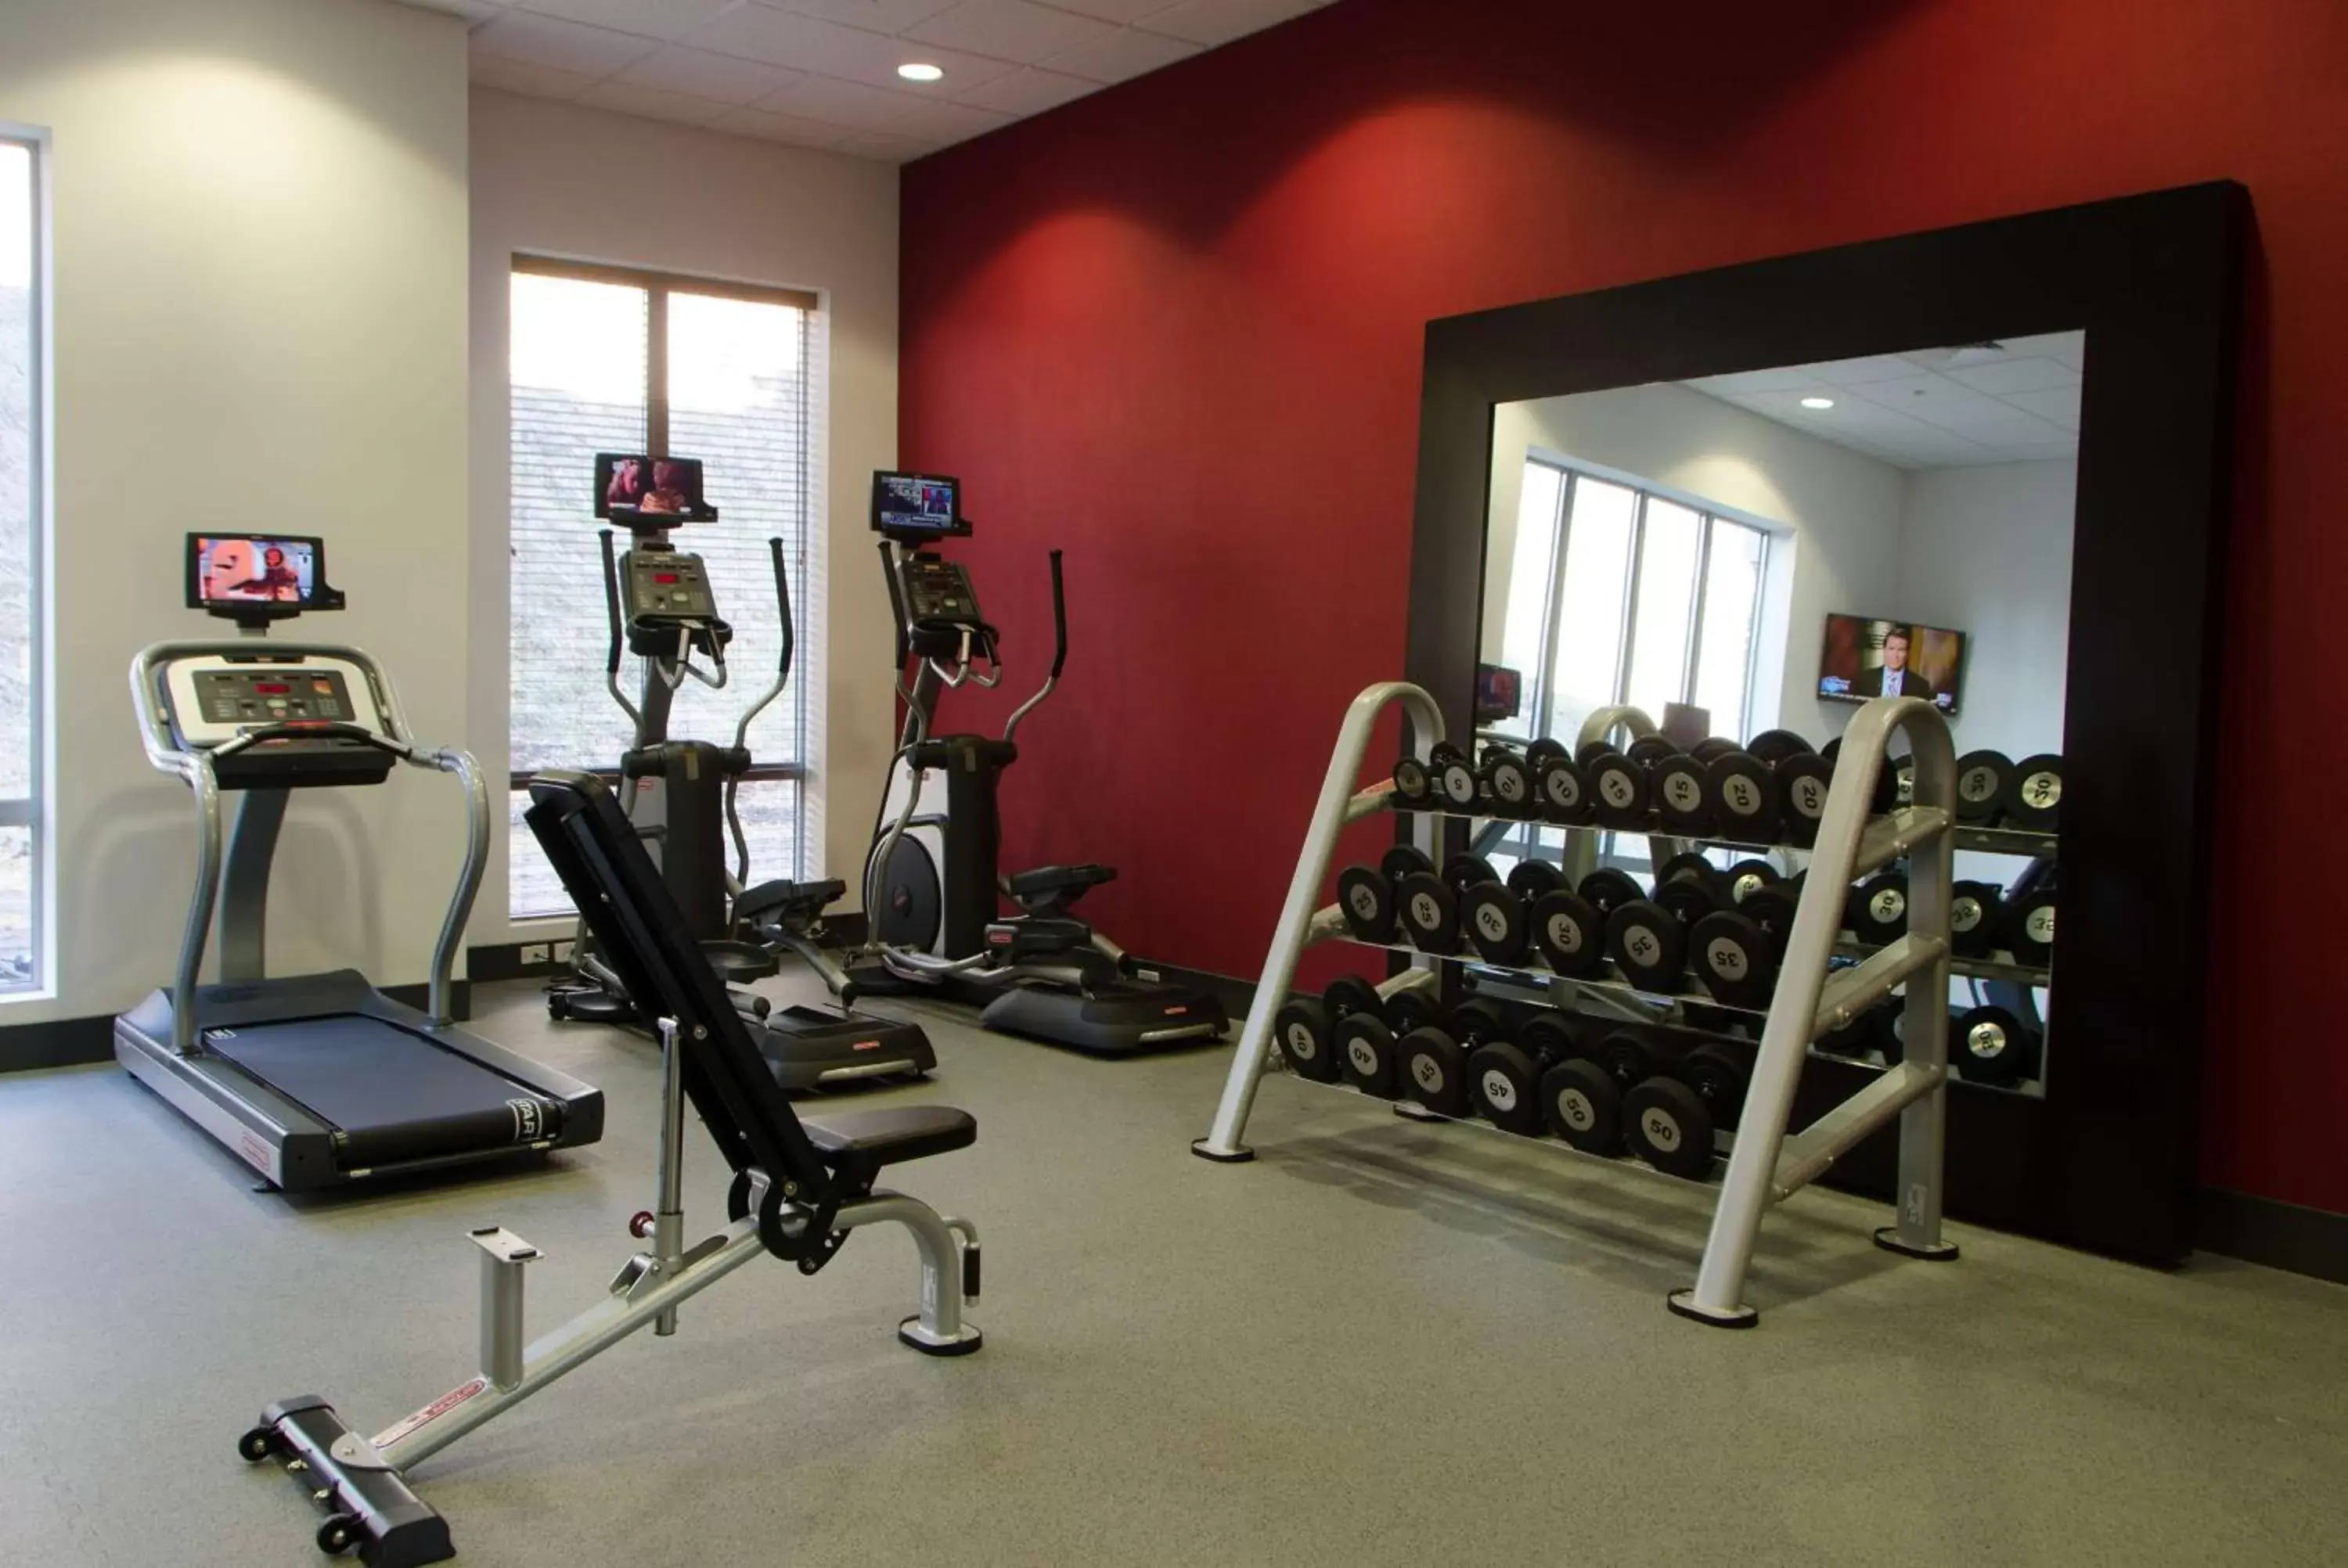 Fitness centre/facilities, Fitness Center/Facilities in Hilton Garden Inn Hickory